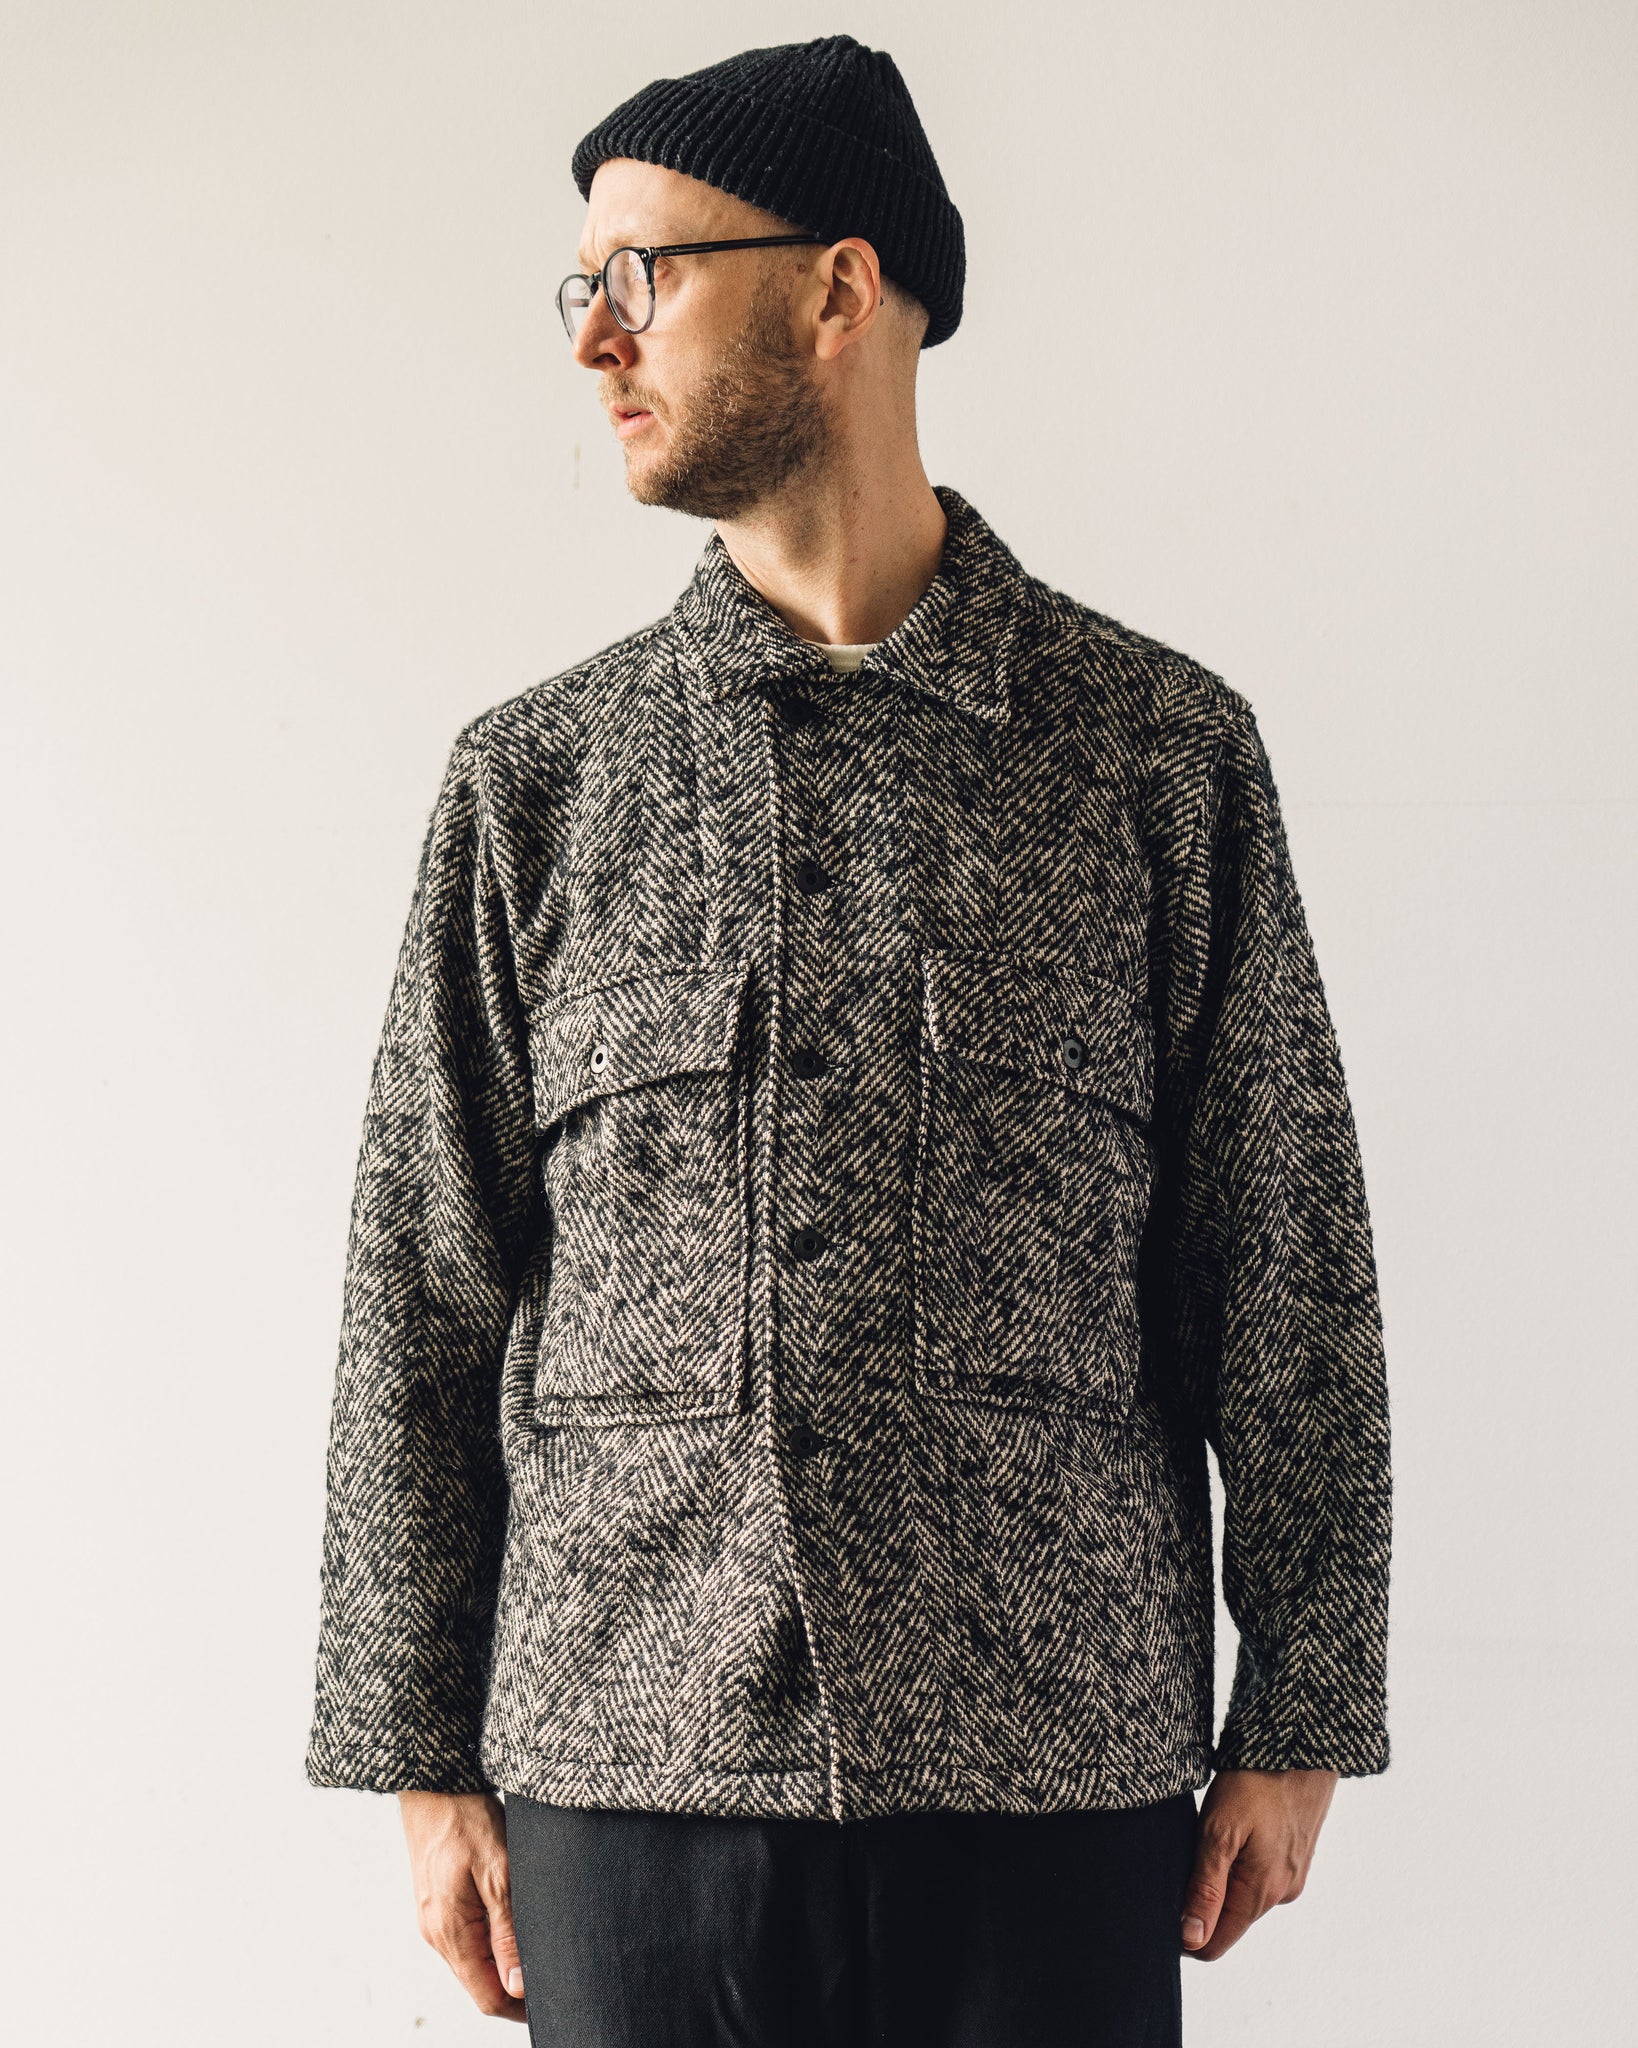 Evan Kinori Bellow Jacket, Wool Herringbone | Glasswing